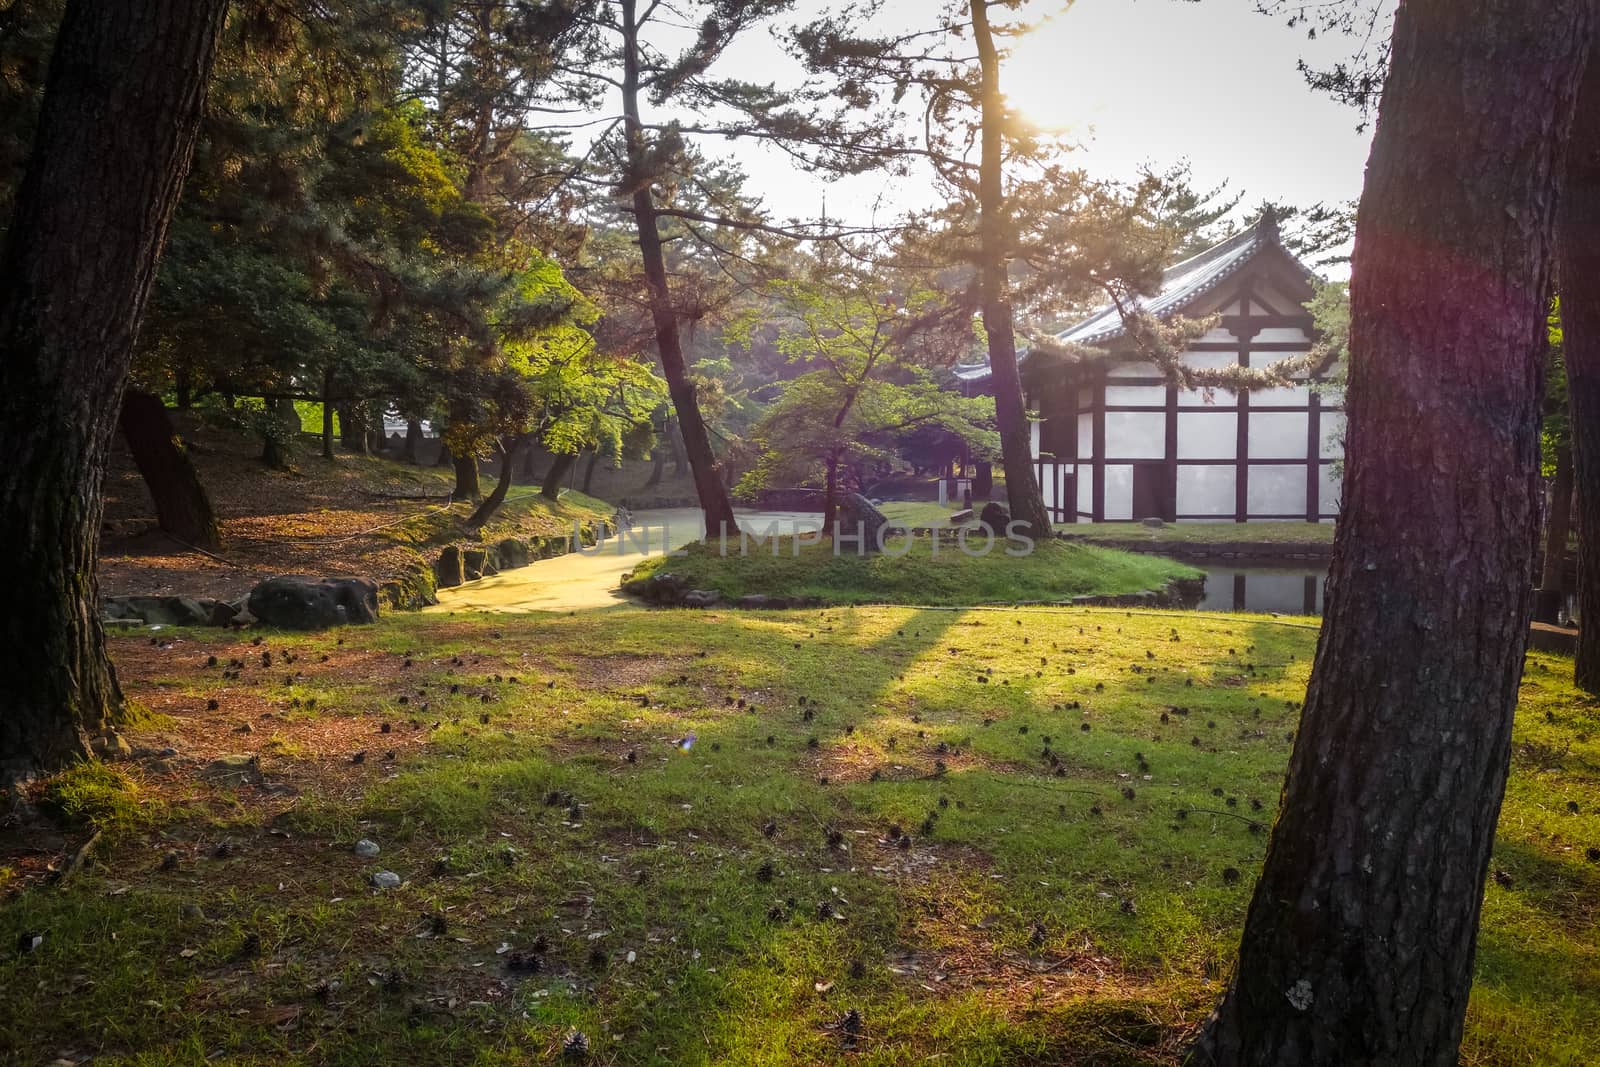 Pavillion in Nara park, Japan by daboost